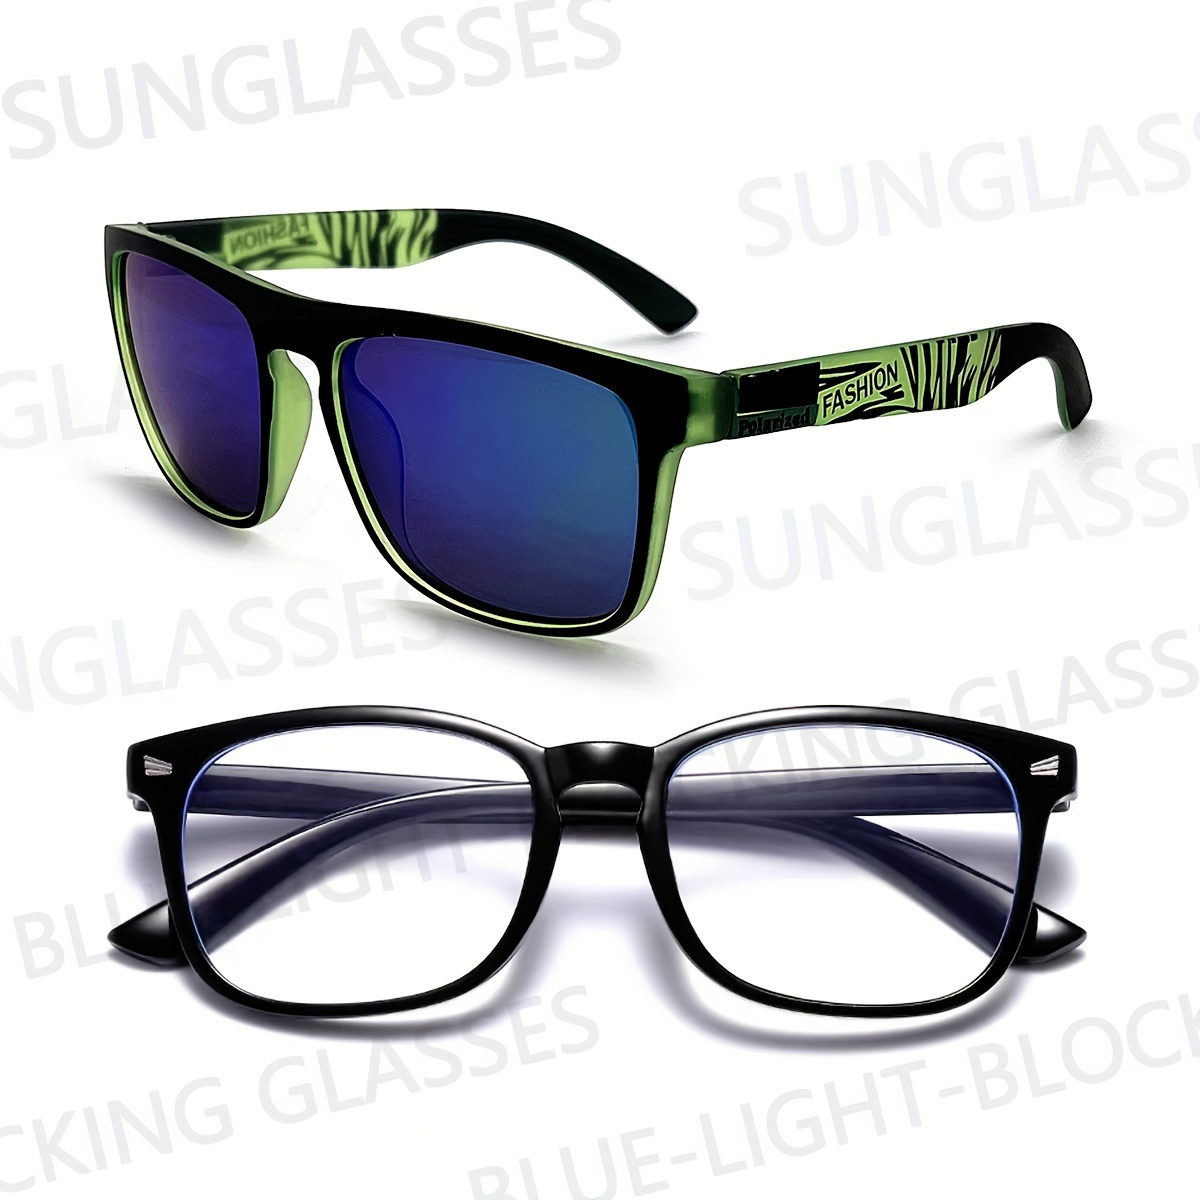 2pairs Glasses Sunglasses Set For Men Women Glasses Flat Top